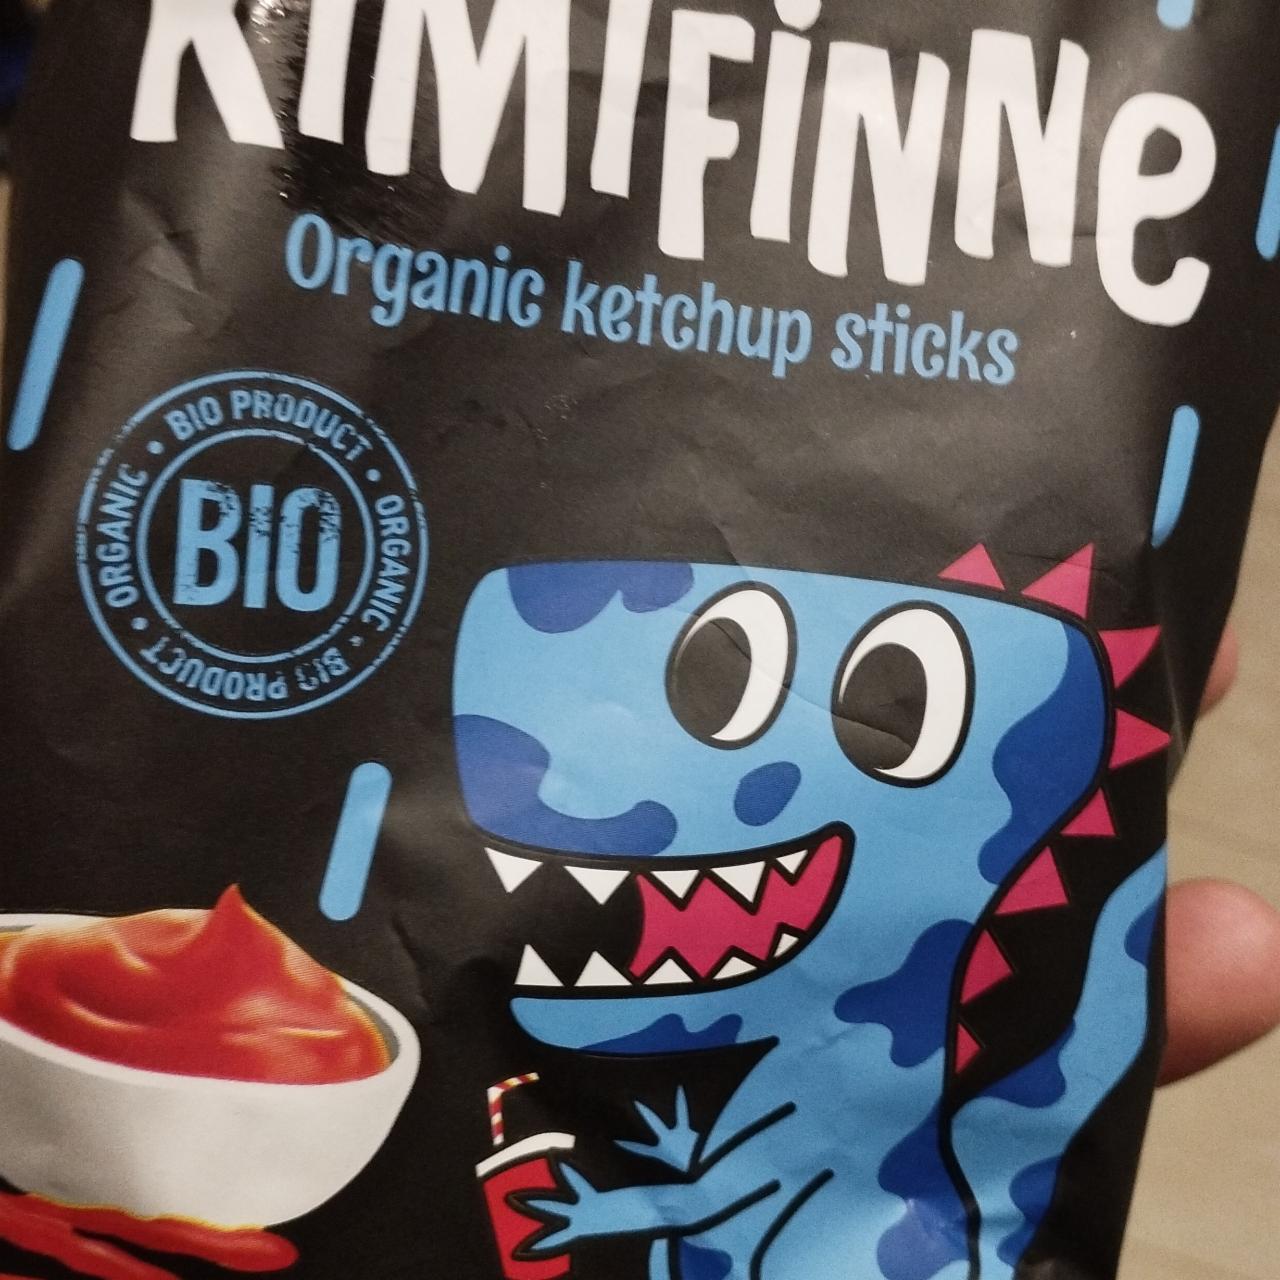 Fotografie - Kimifinne organic ketchup sticks